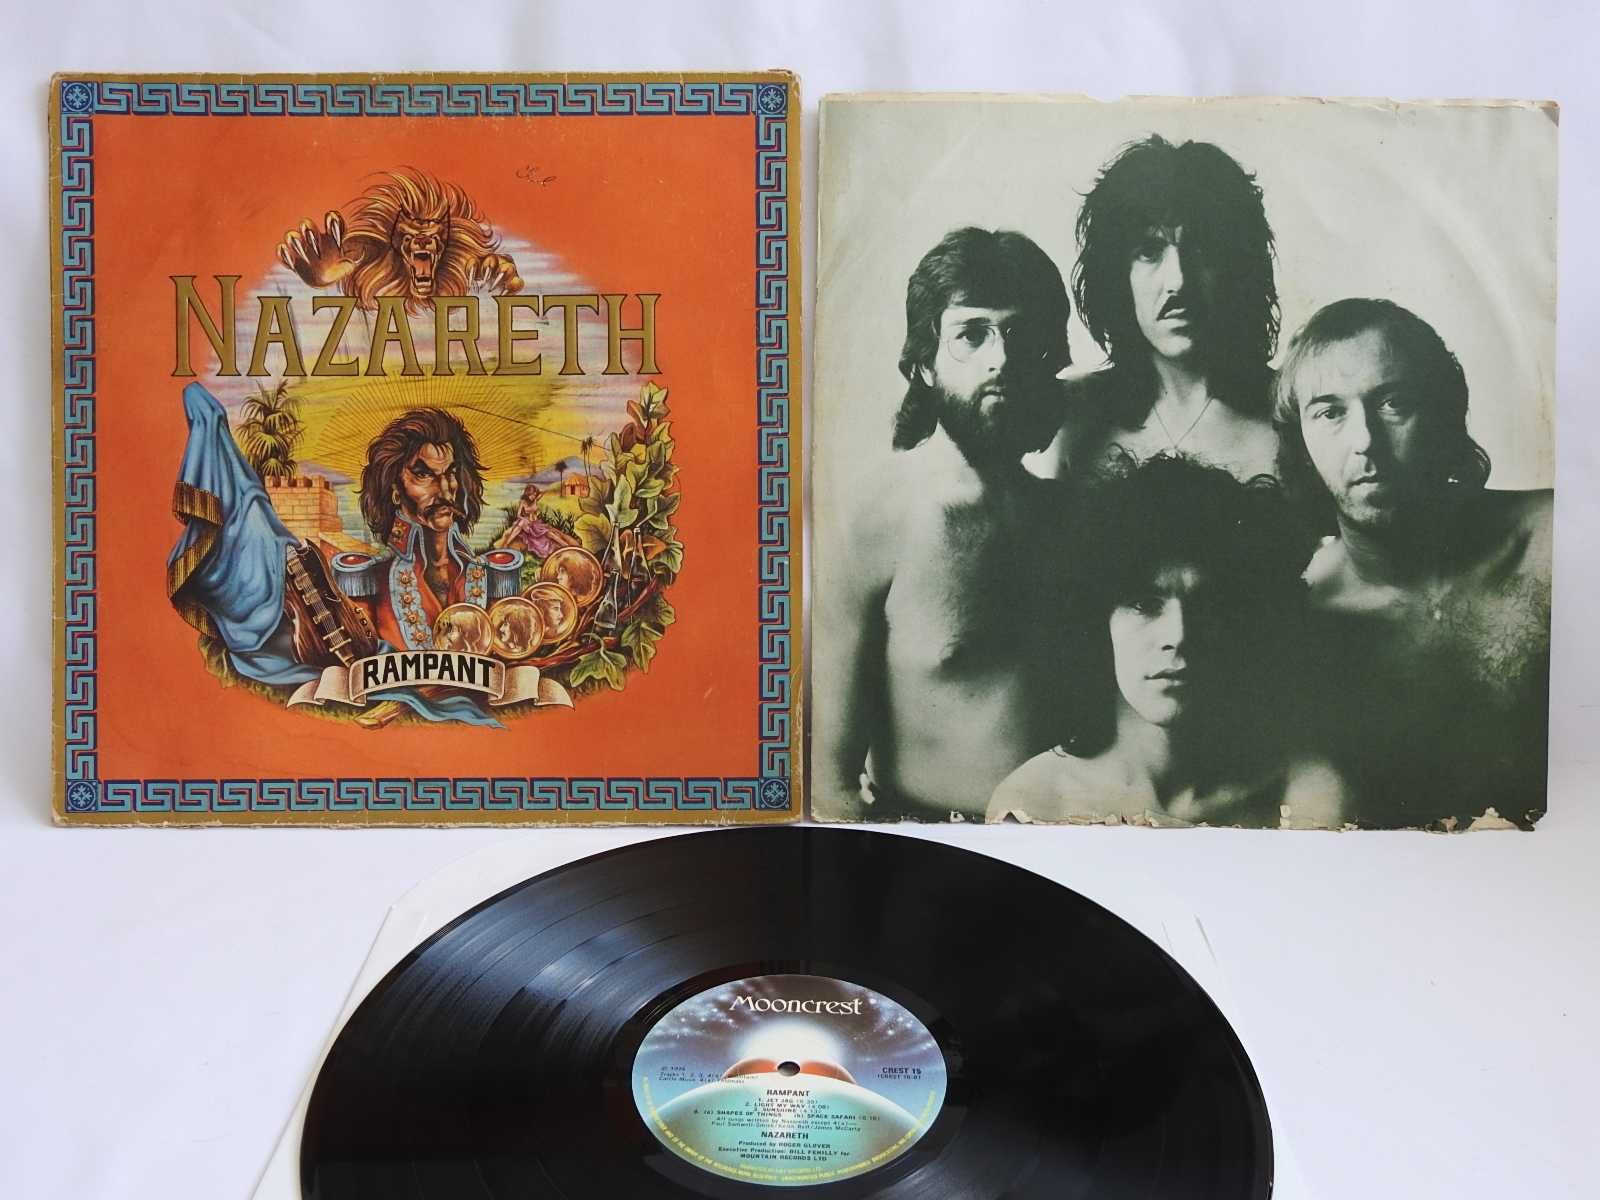 Nazareth Rampant LP пластинка 1974 Великобритания UK EX+ 1 press ориг